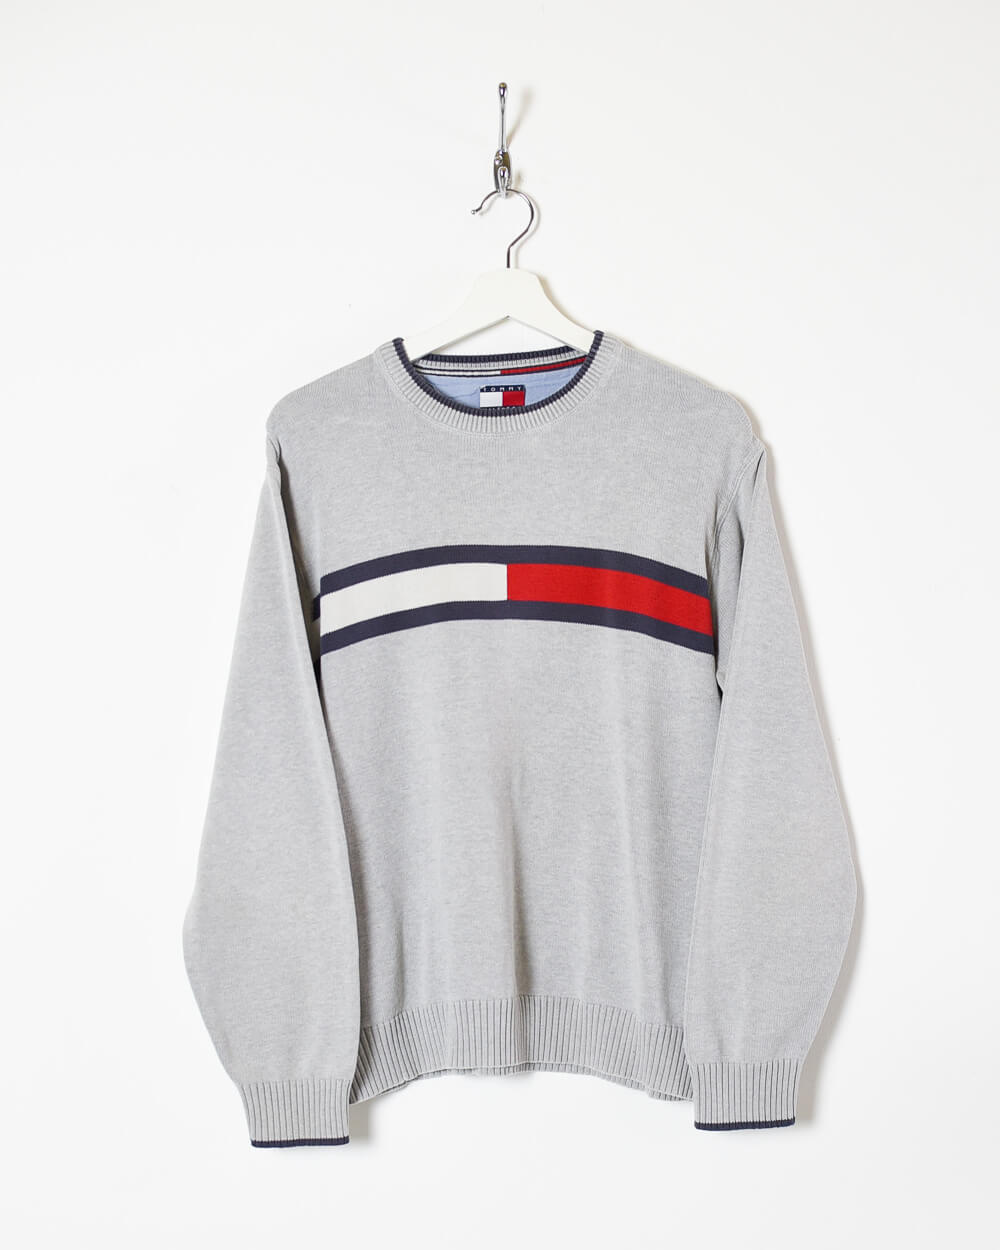 Stone Tommy Hilfiger Knitted Sweatshirt - Small